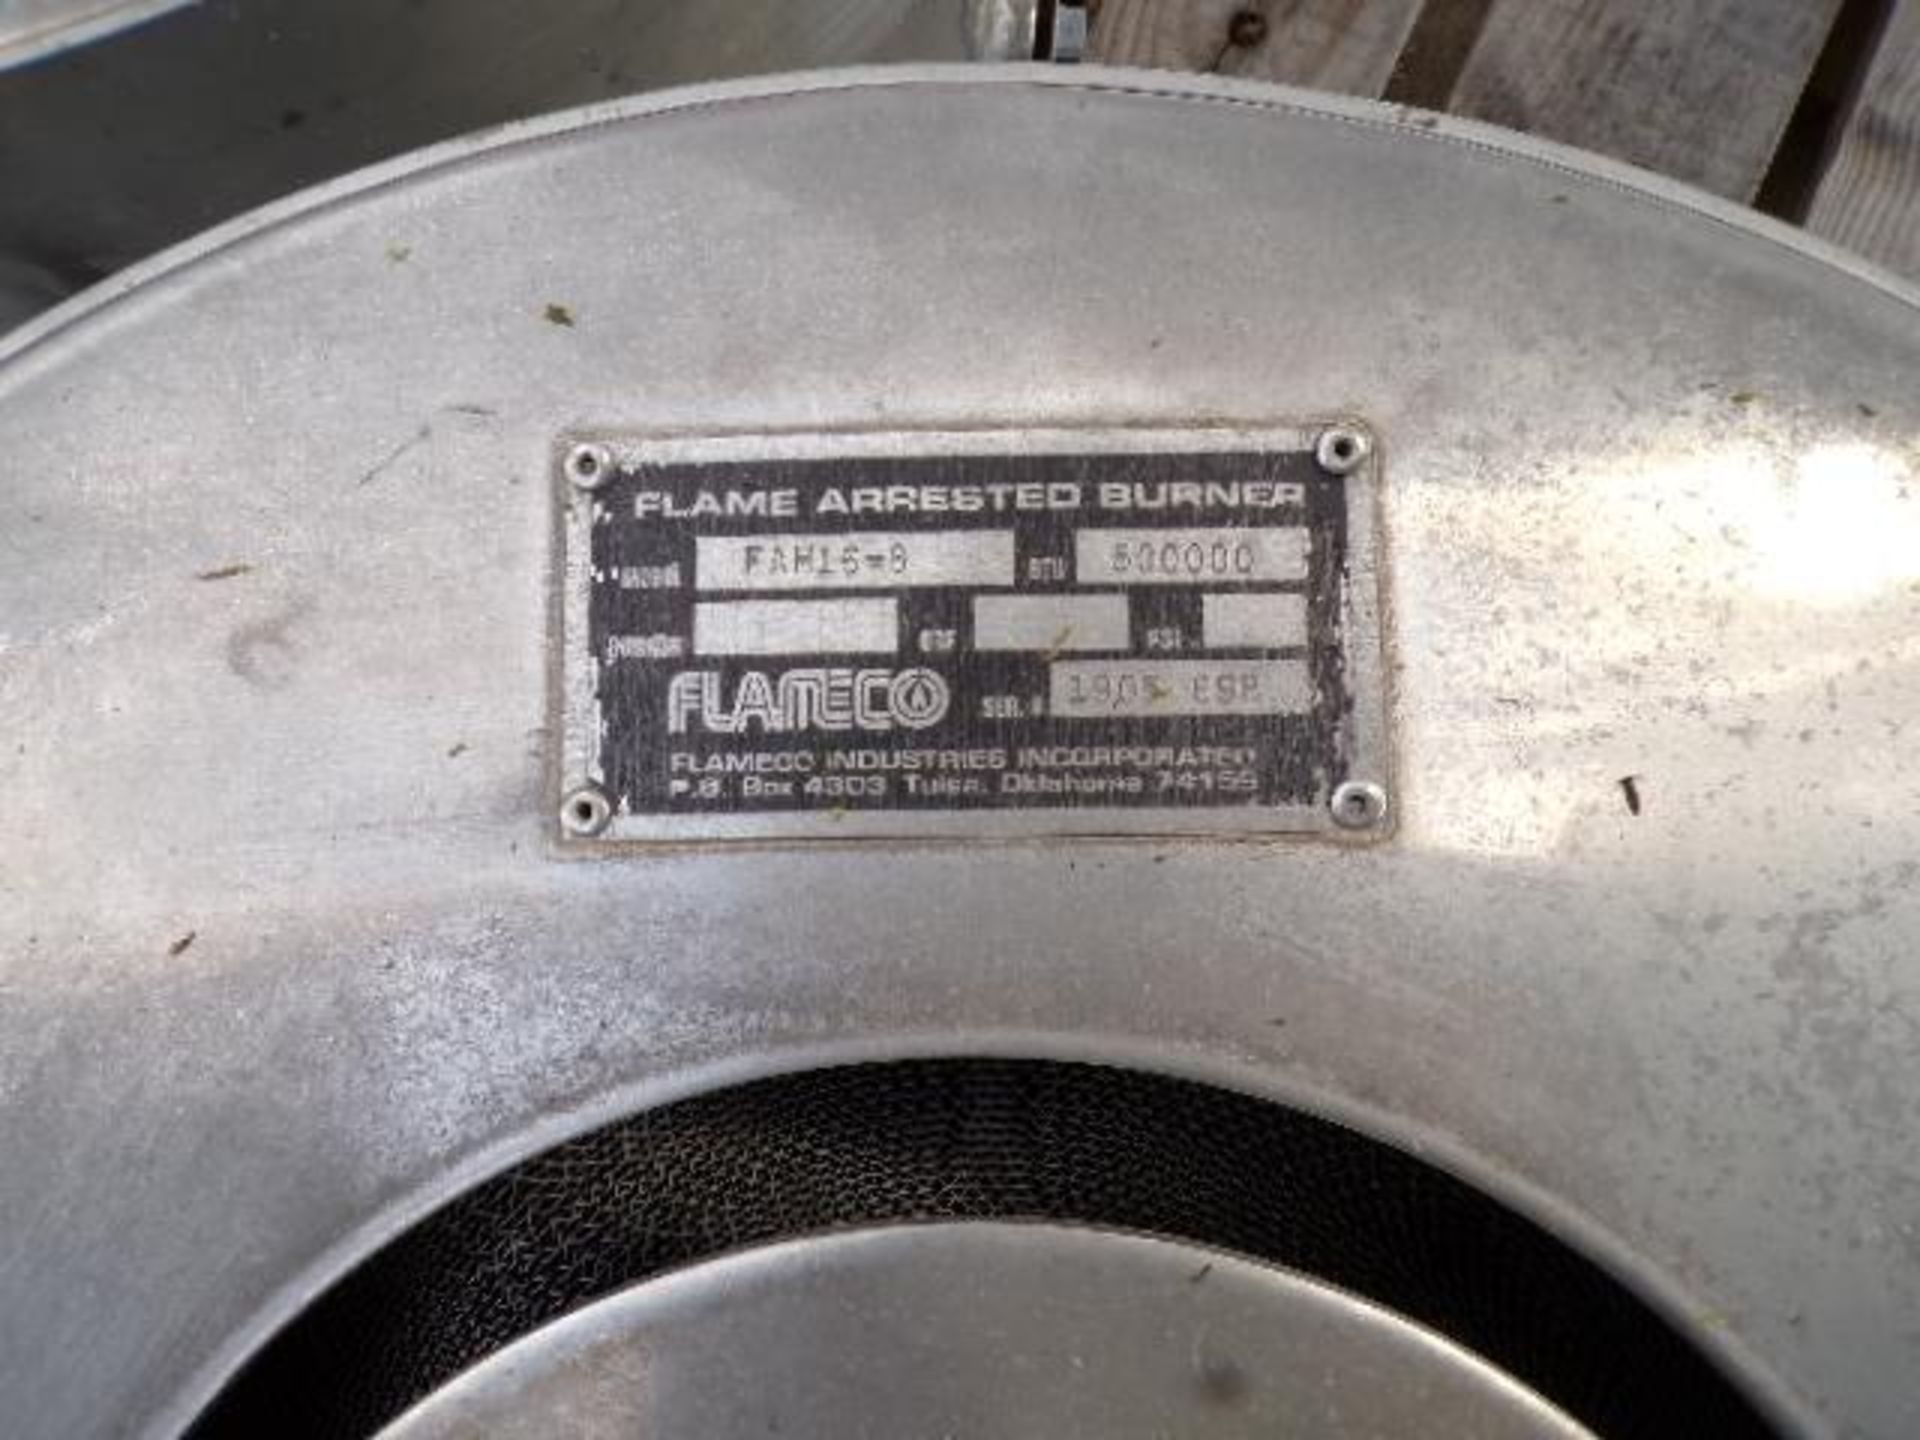 (2) Flameco Flame Arrested Burners, Model FAH16-8, 500,000 BTU (Used) - Image 3 of 3